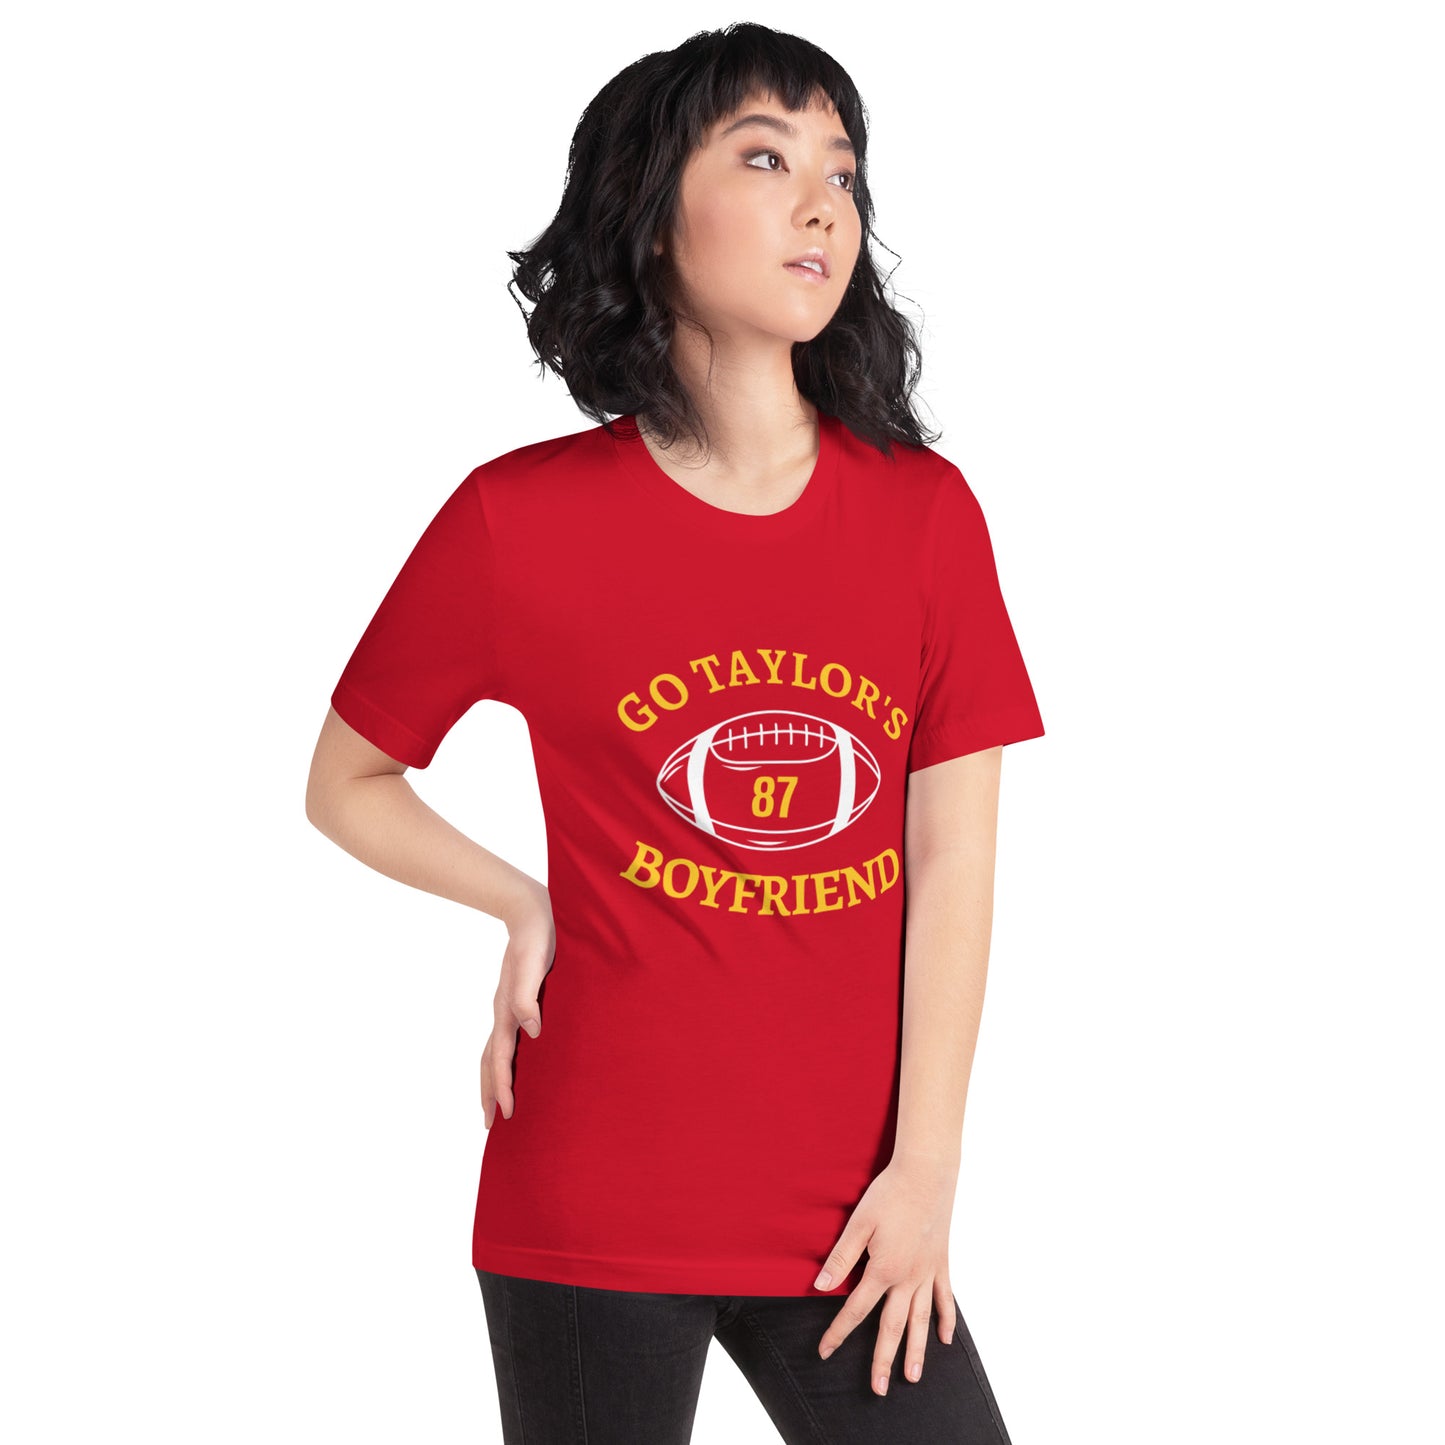 Go Taylor's Boyfriend - Unisex t-shirt